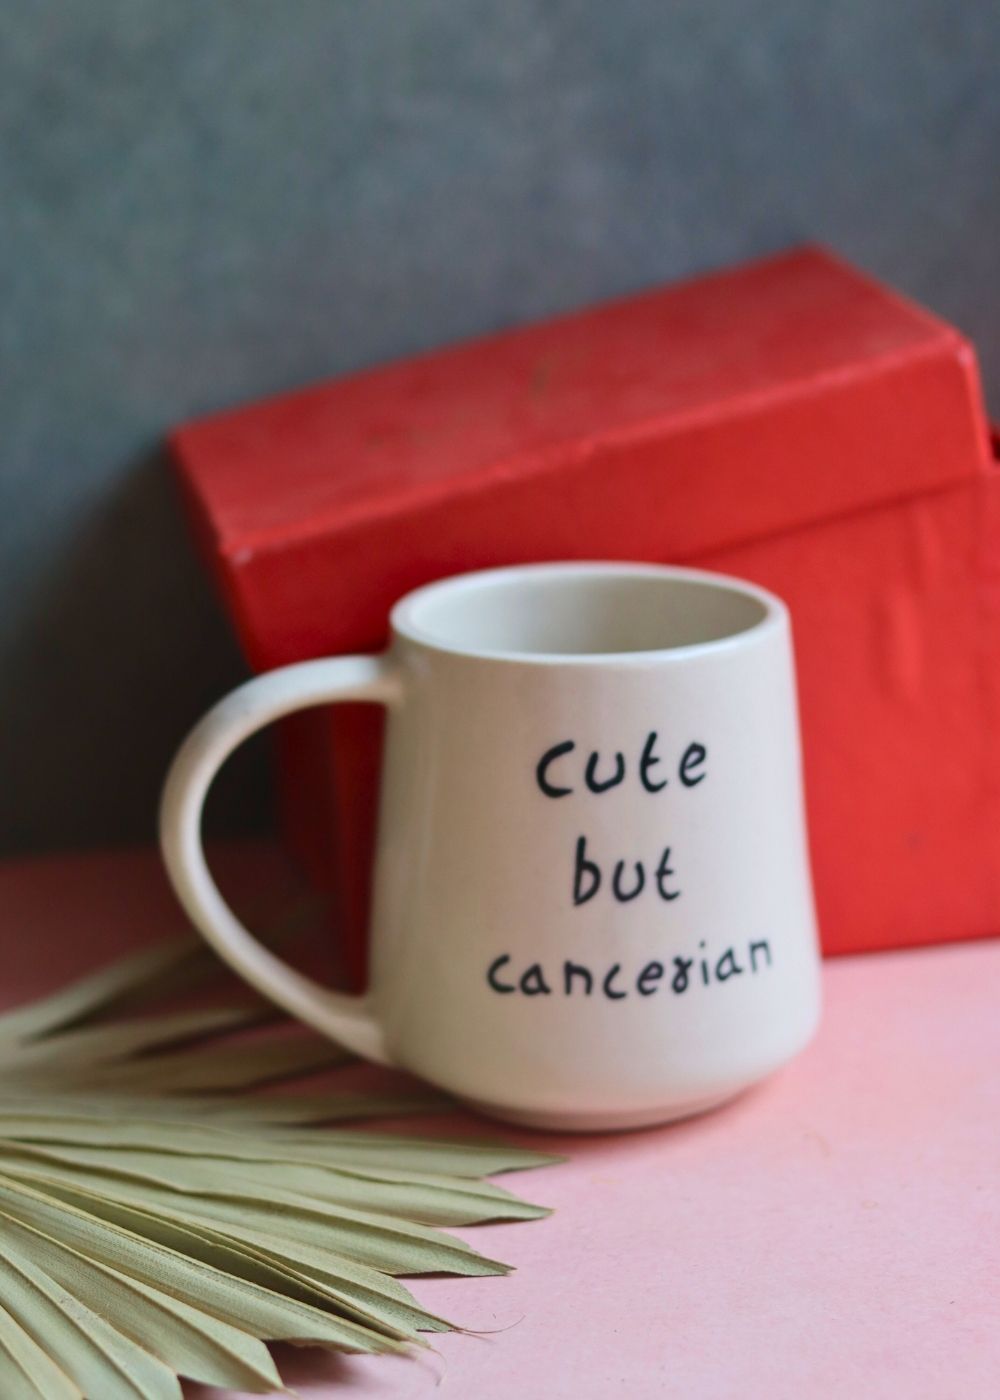 cute but cancerian mug made by ceramic 